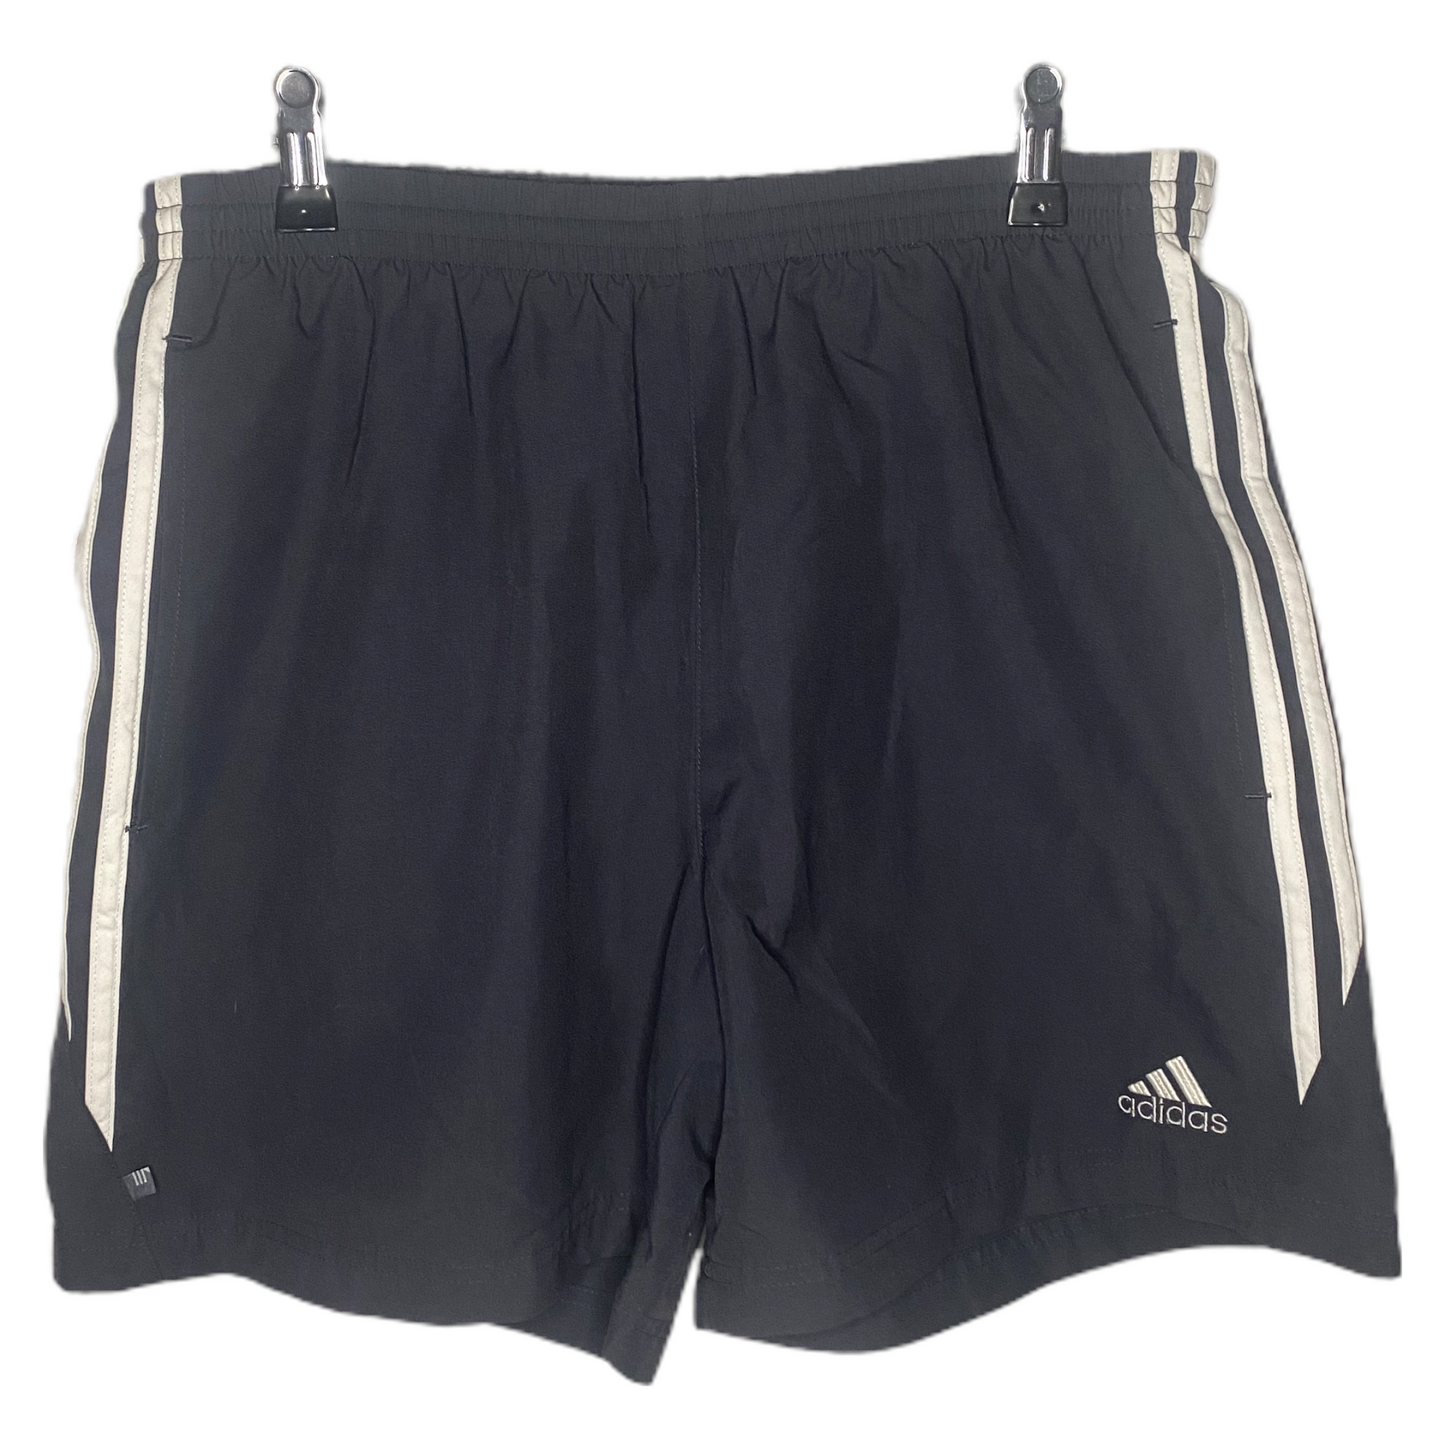 Adidas Classic Striped Shorts